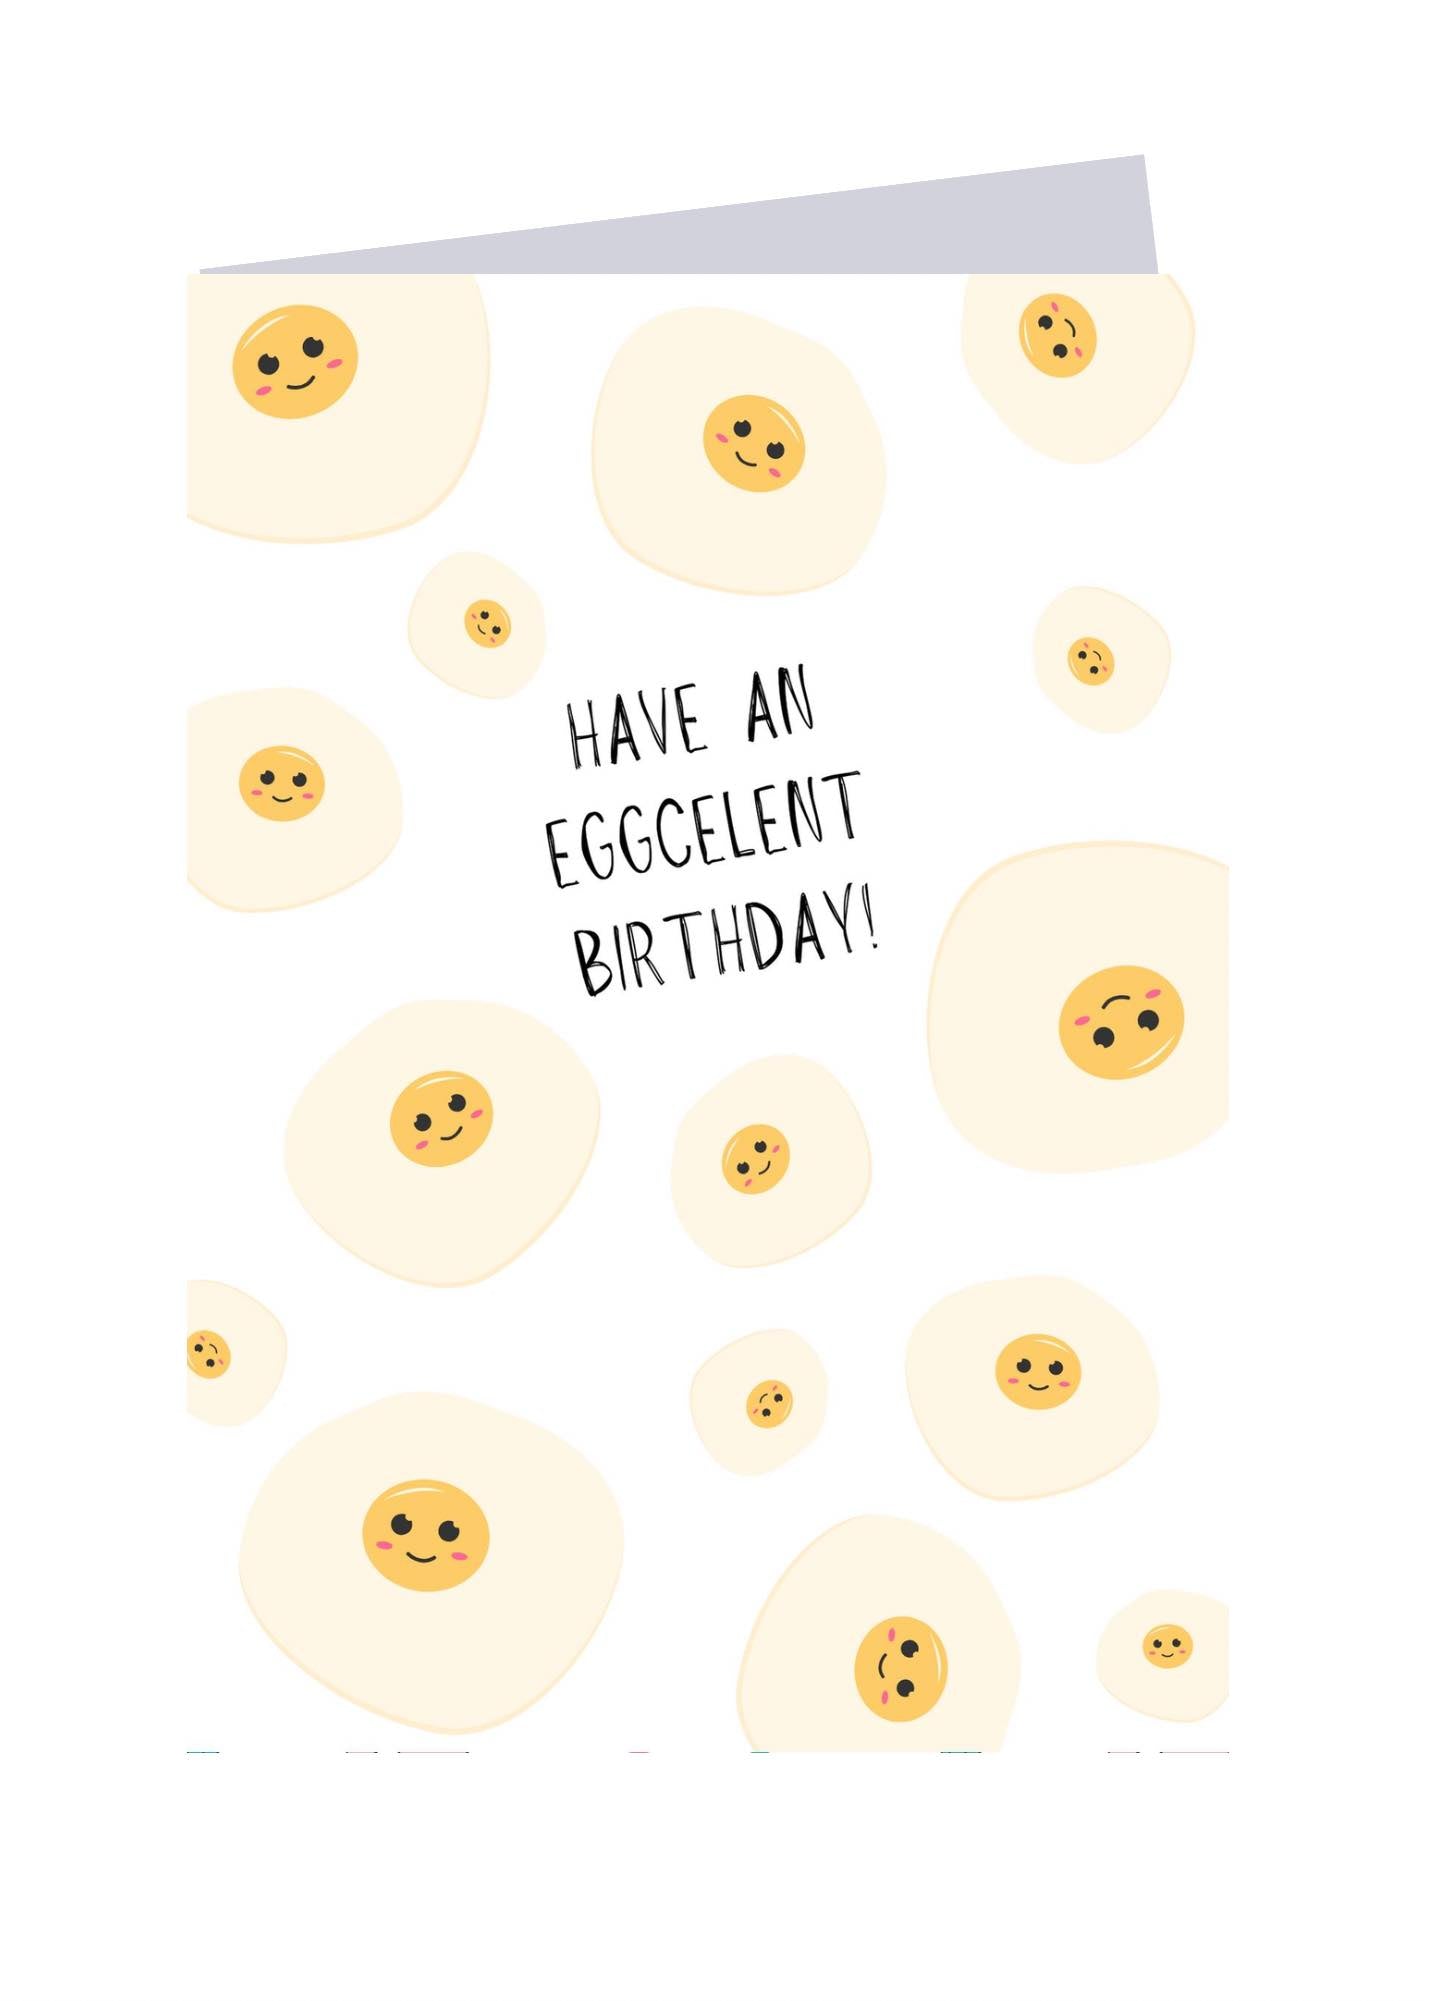 Have an EGGCELENT Birthday!